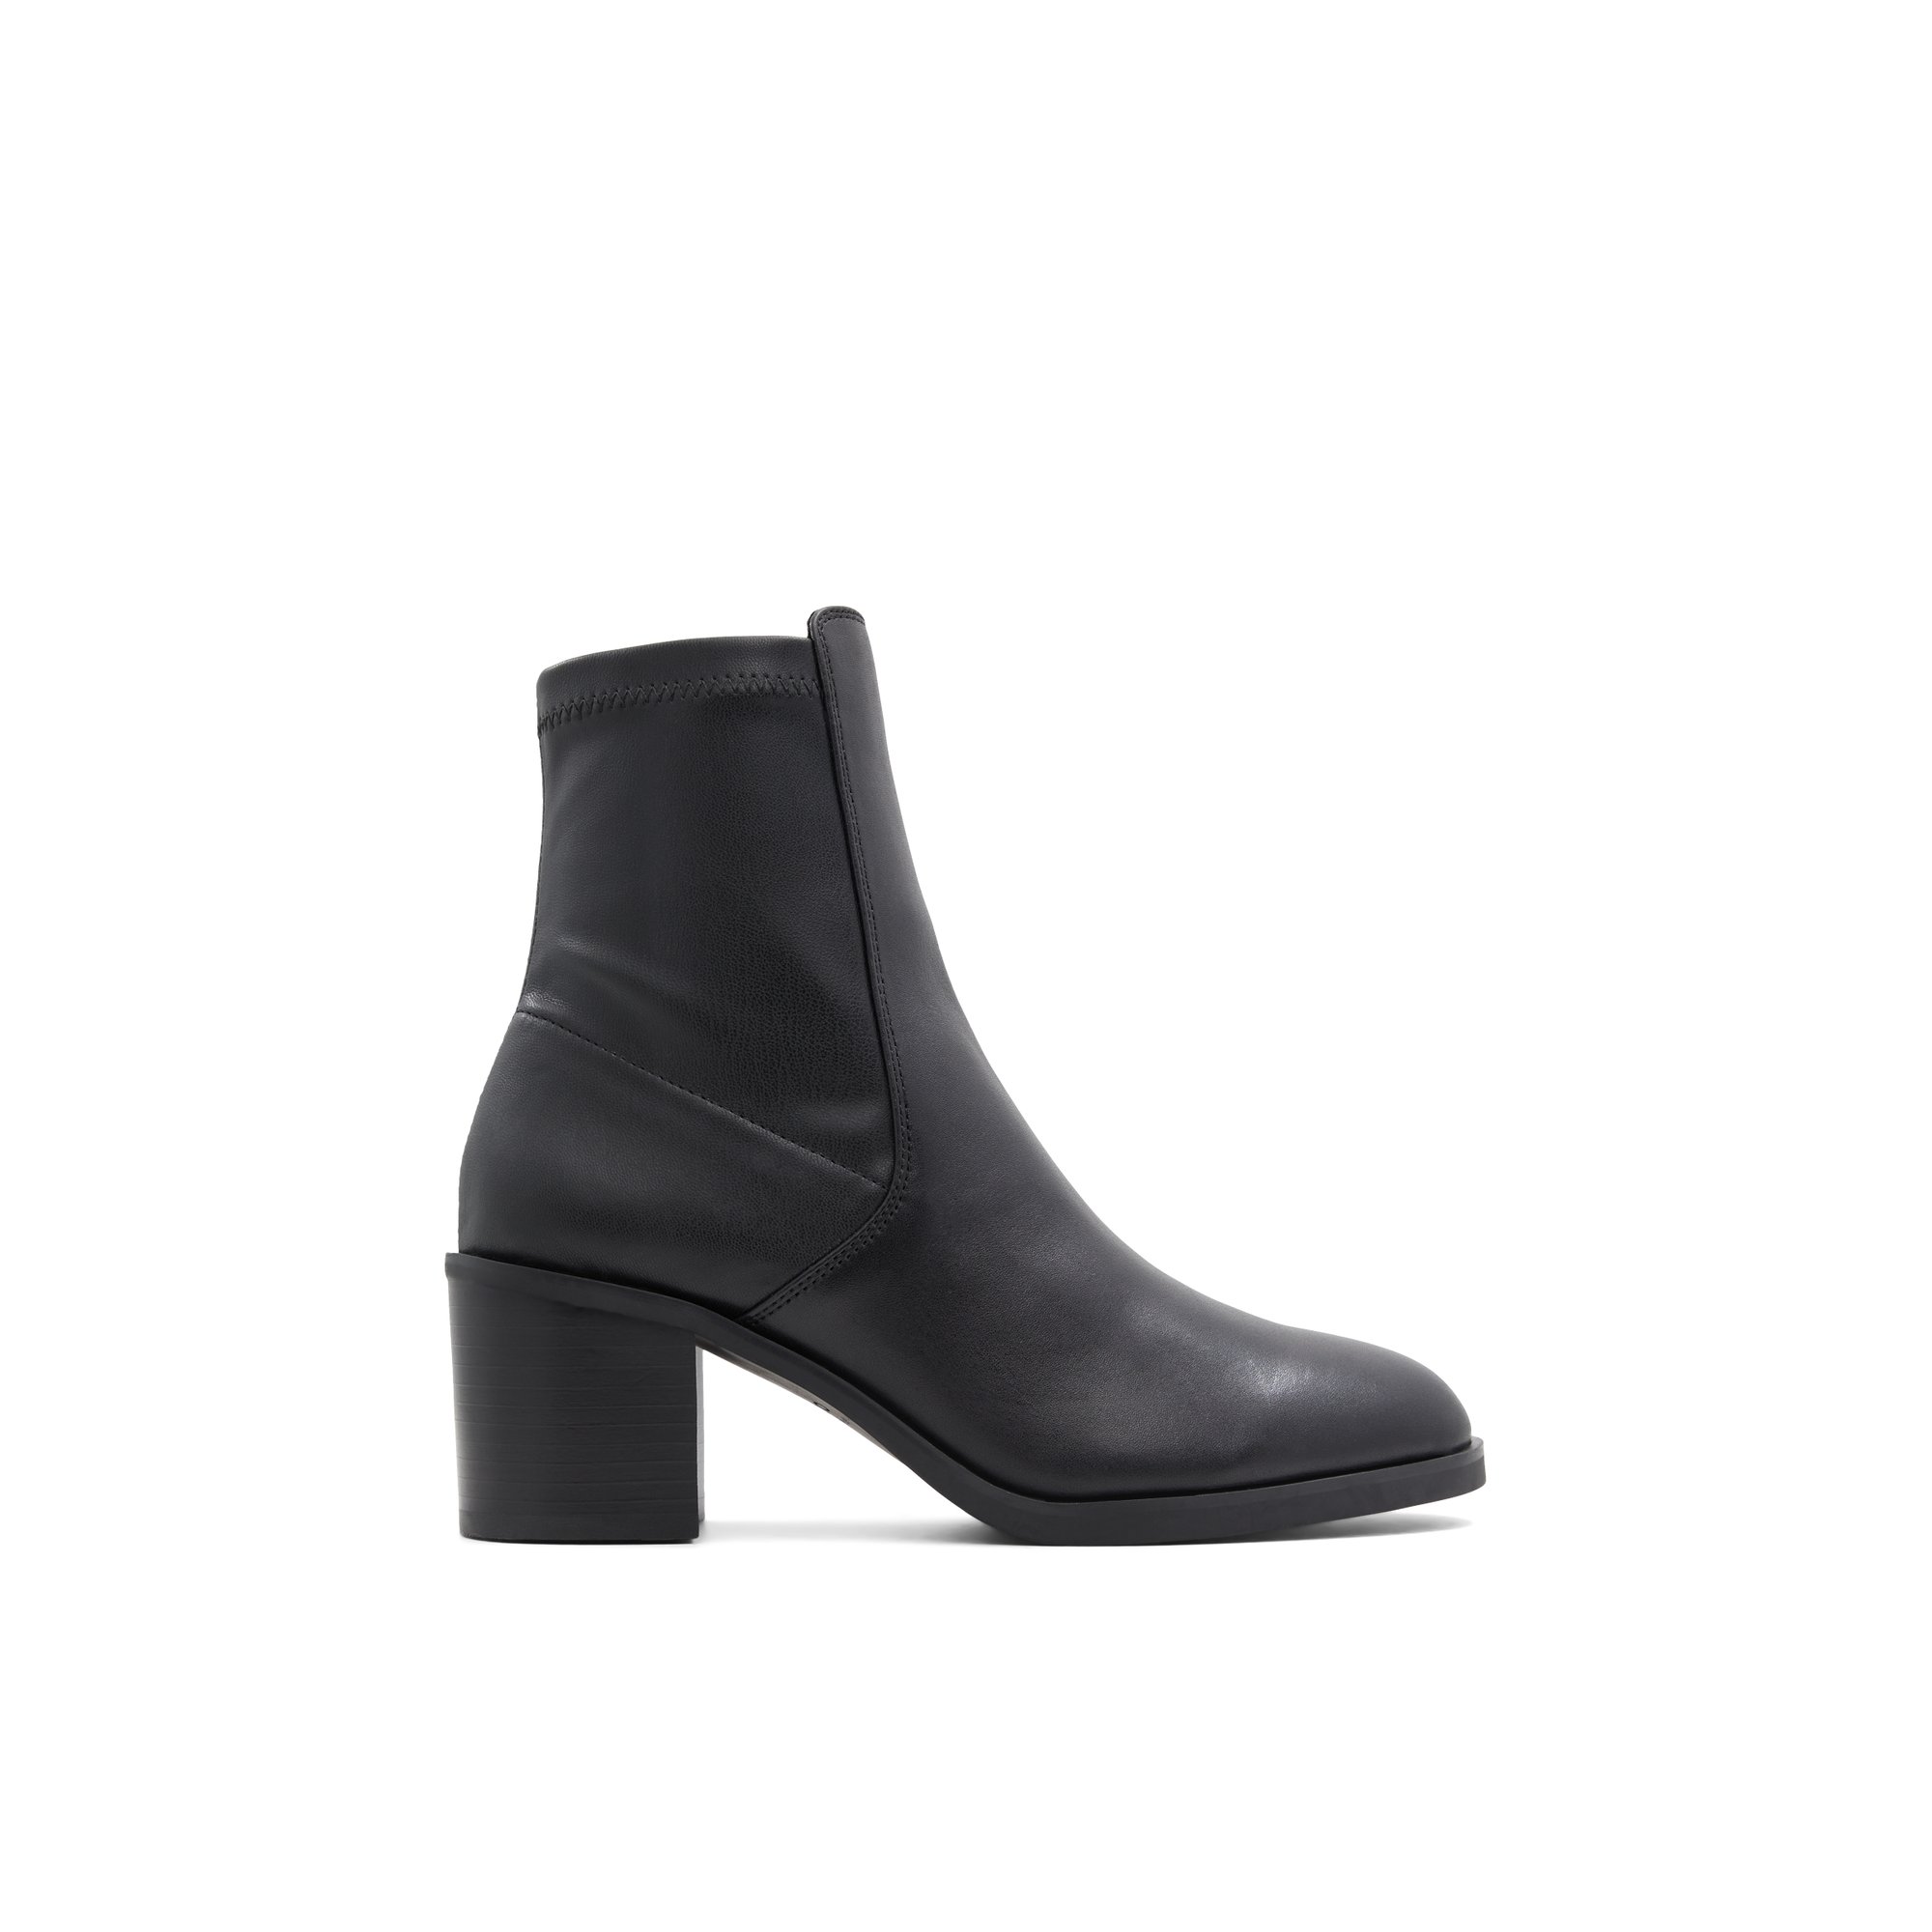 ALDO Ranobrerel - Women's Boots Ankle - Black